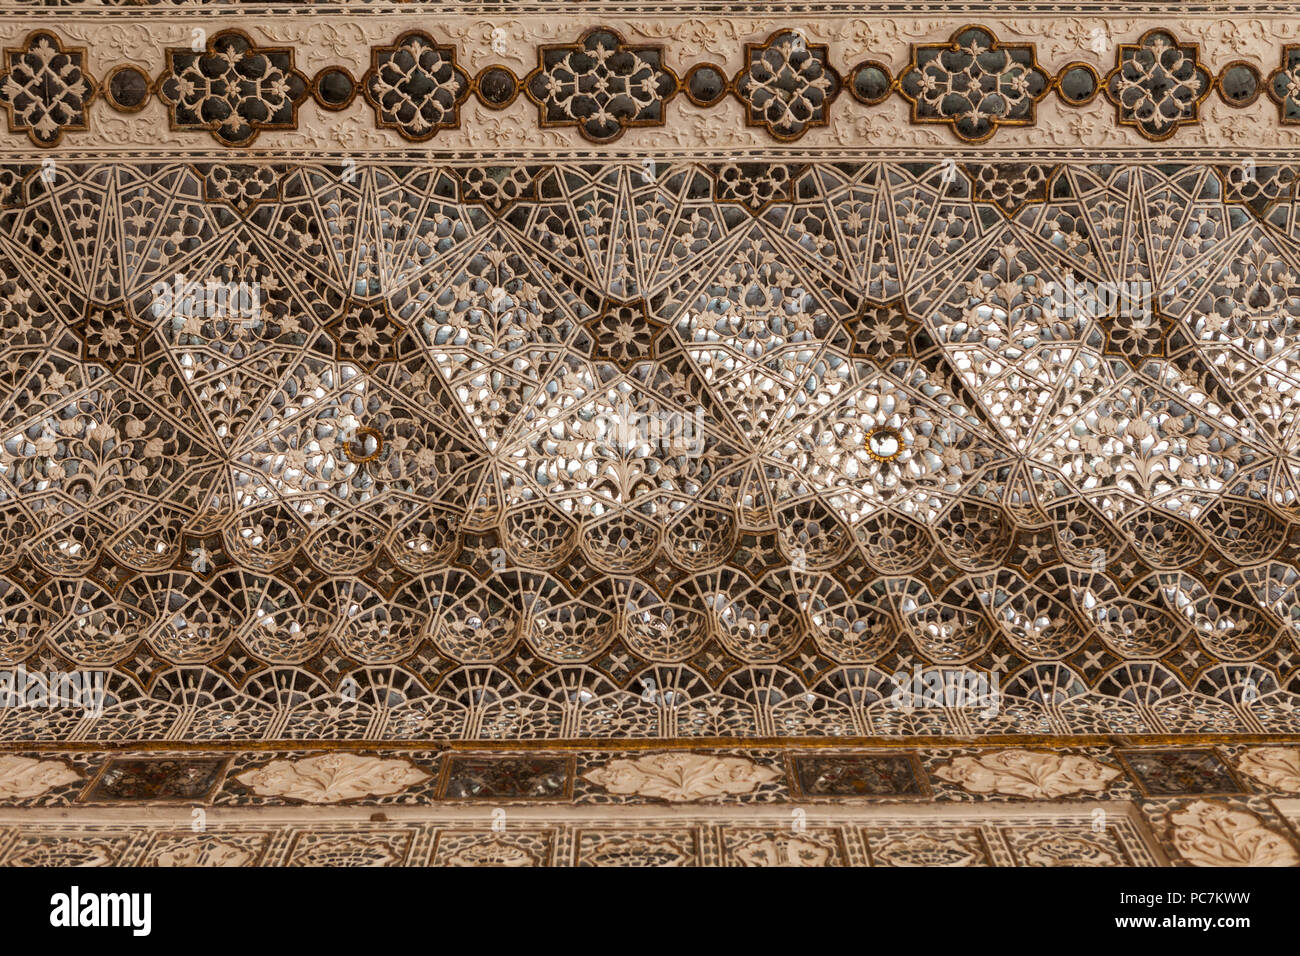 Ornate latticework ceiling inside Amber Palace / Amer Fort Stock Photo